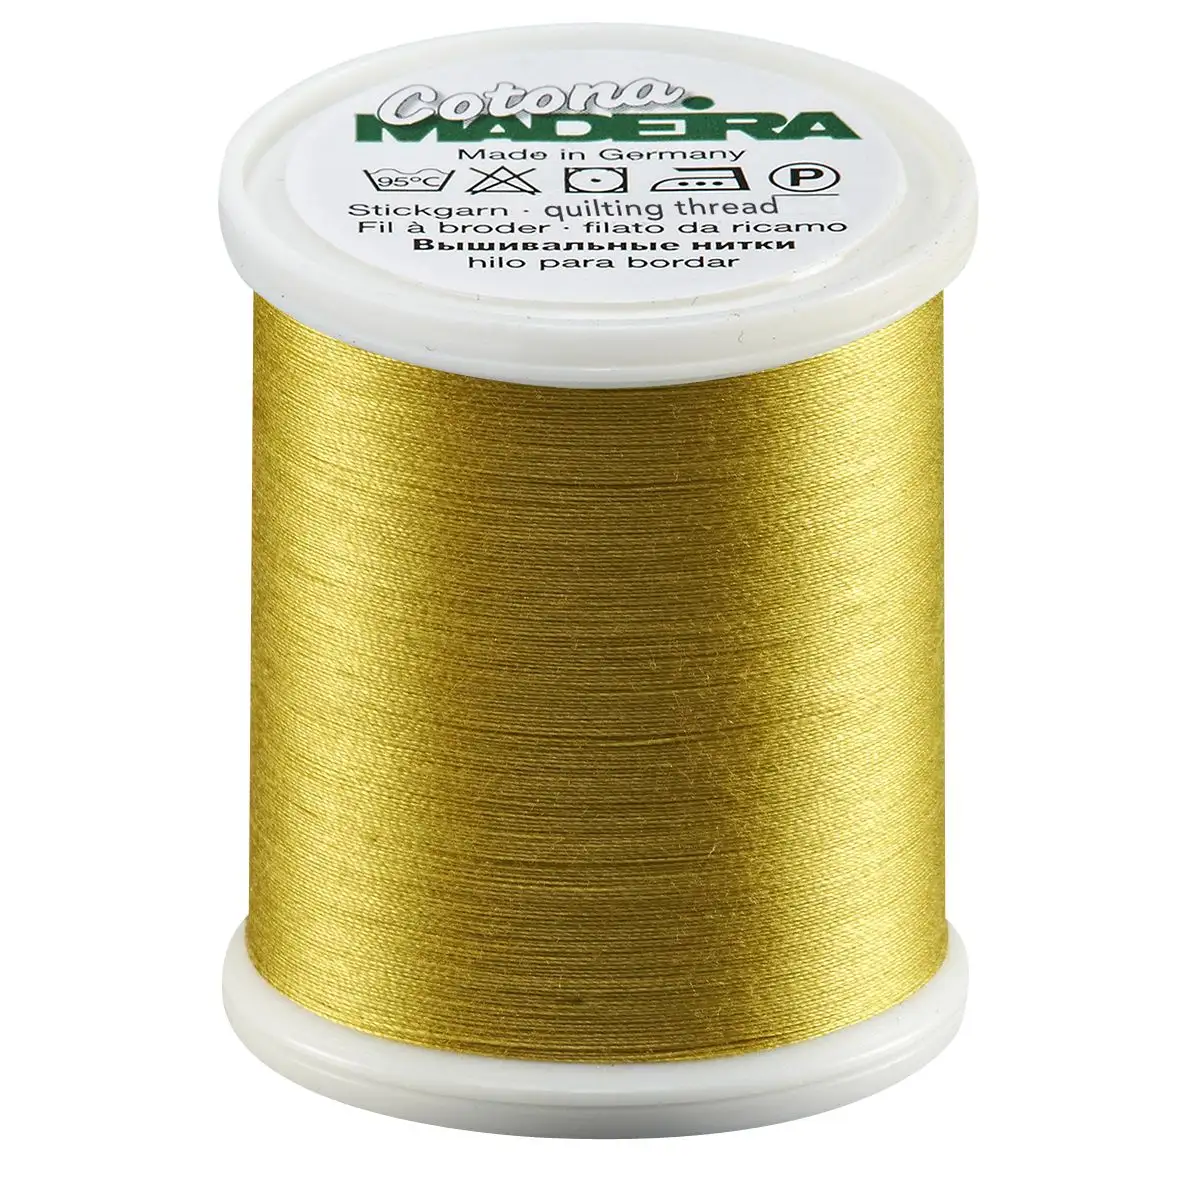 Madeira Cotona 50wt Cotton - 575 Mustard Yellow